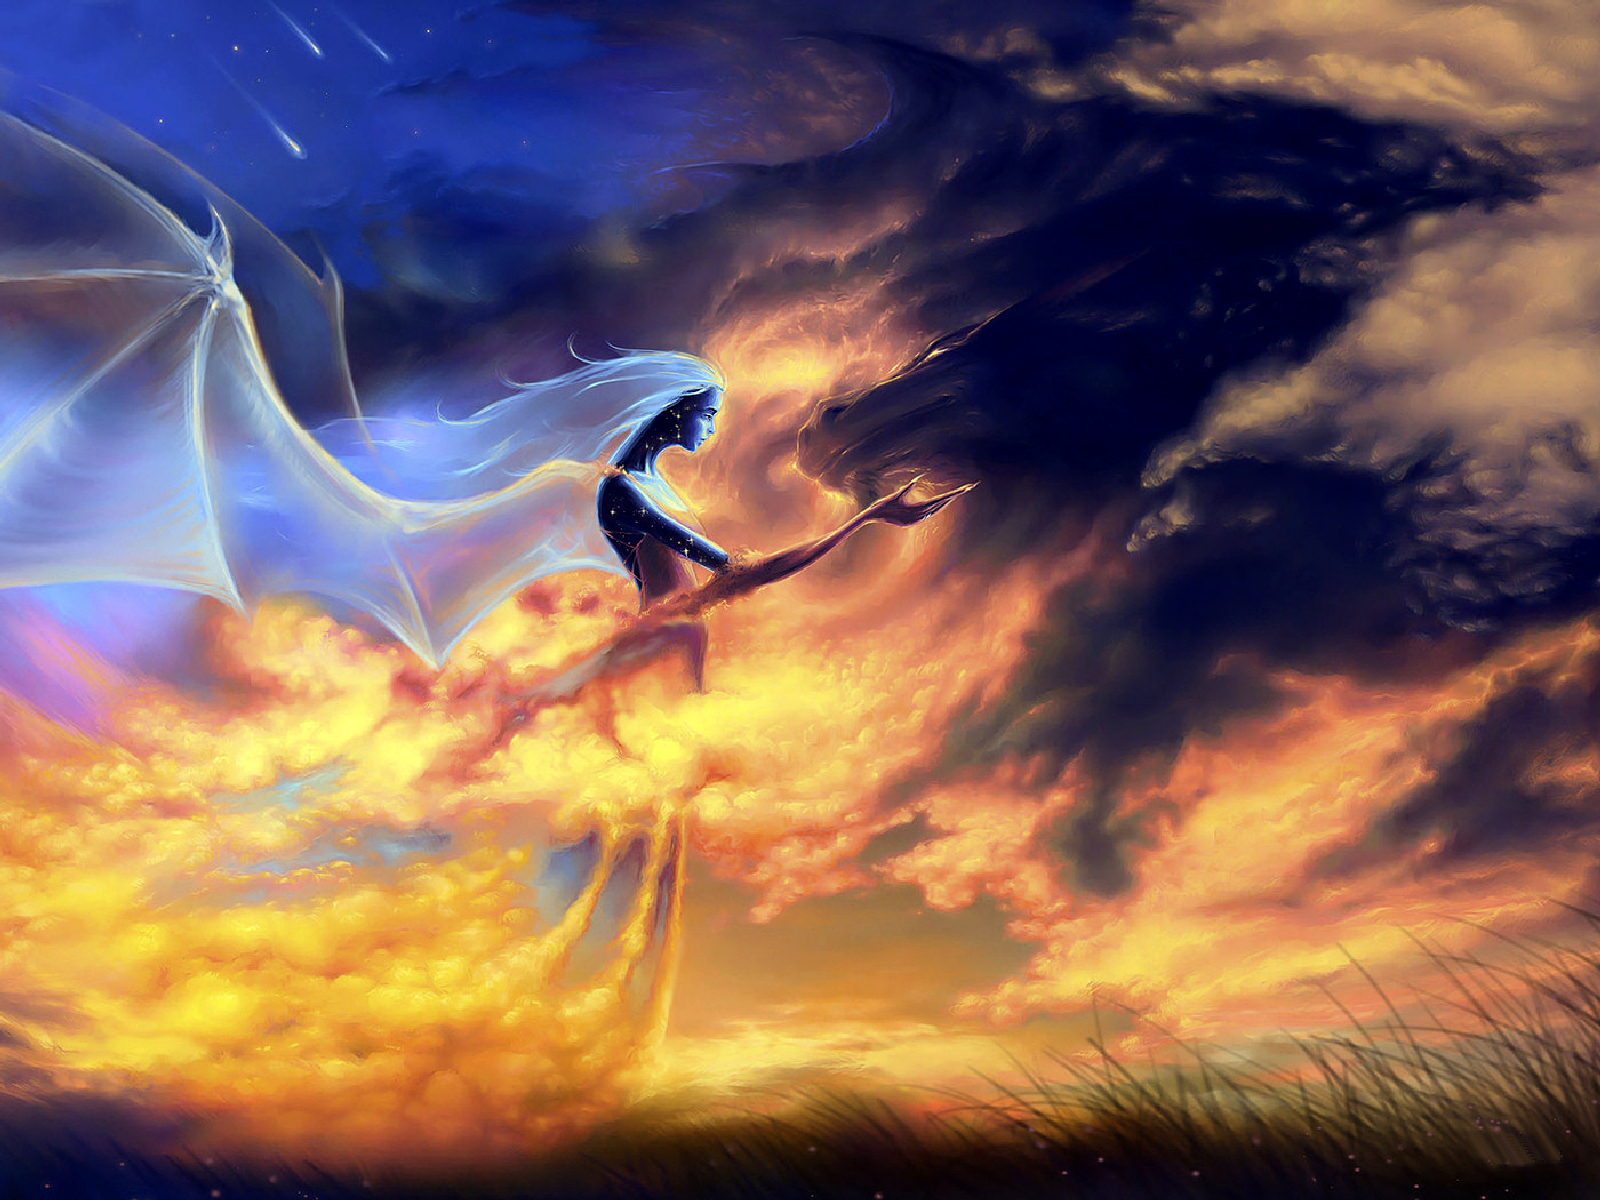 Fantasy dragon flying under a vibrant sky - Sky Mistress.